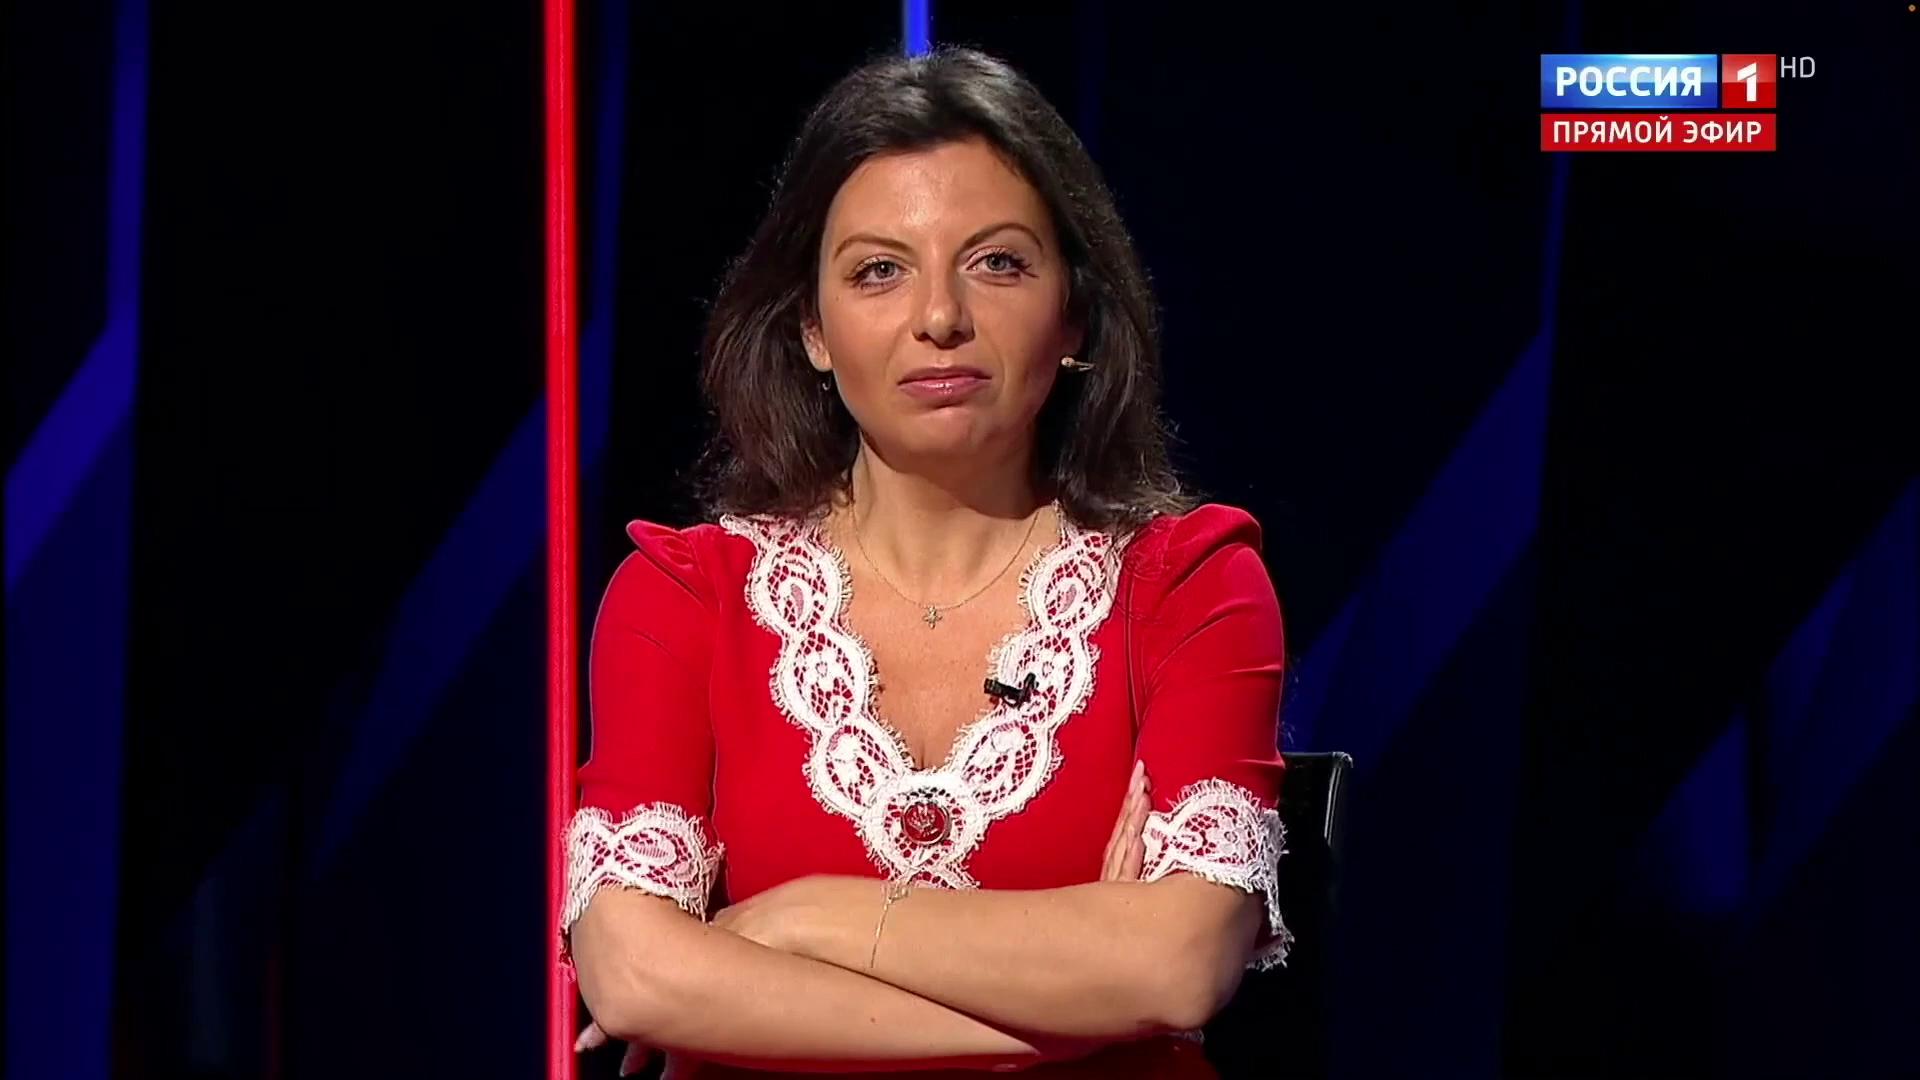 Margarita Simonyan on Russian TV